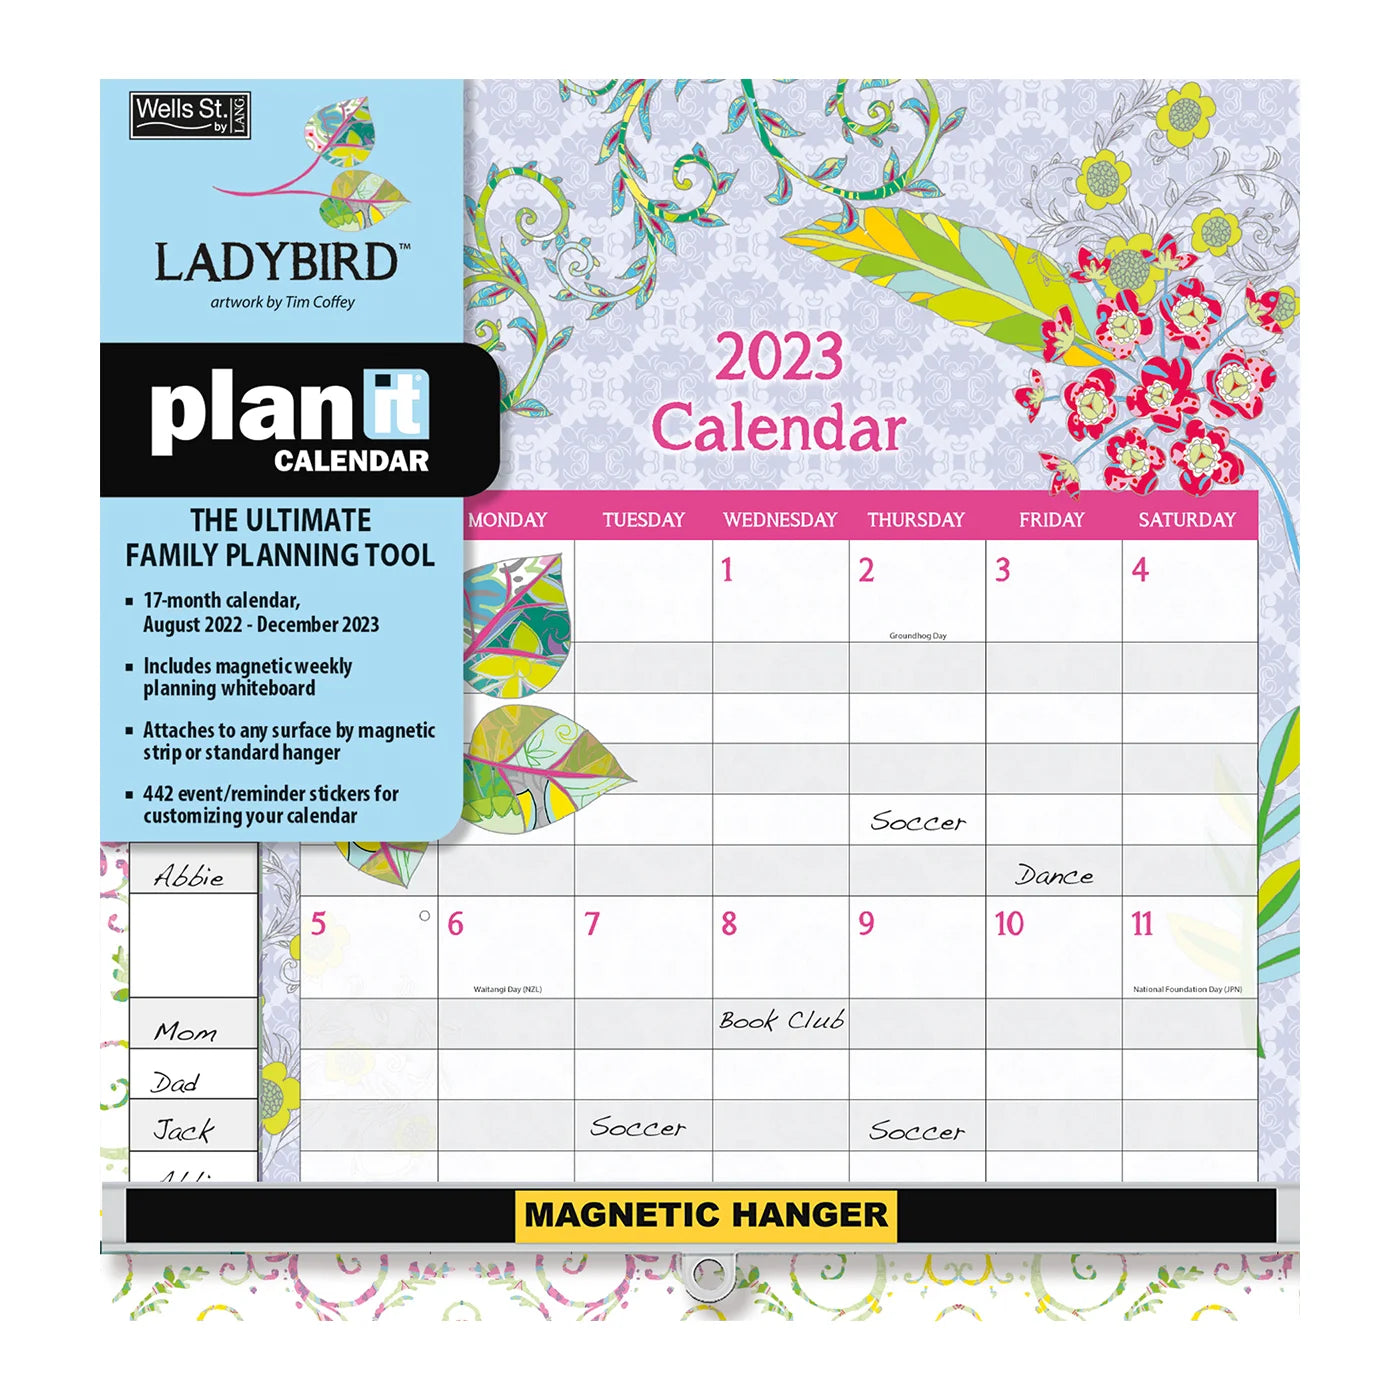 2023 LANG Ladybird by Tim Coffey - Plan-it Magnetic Square Wall Calendar